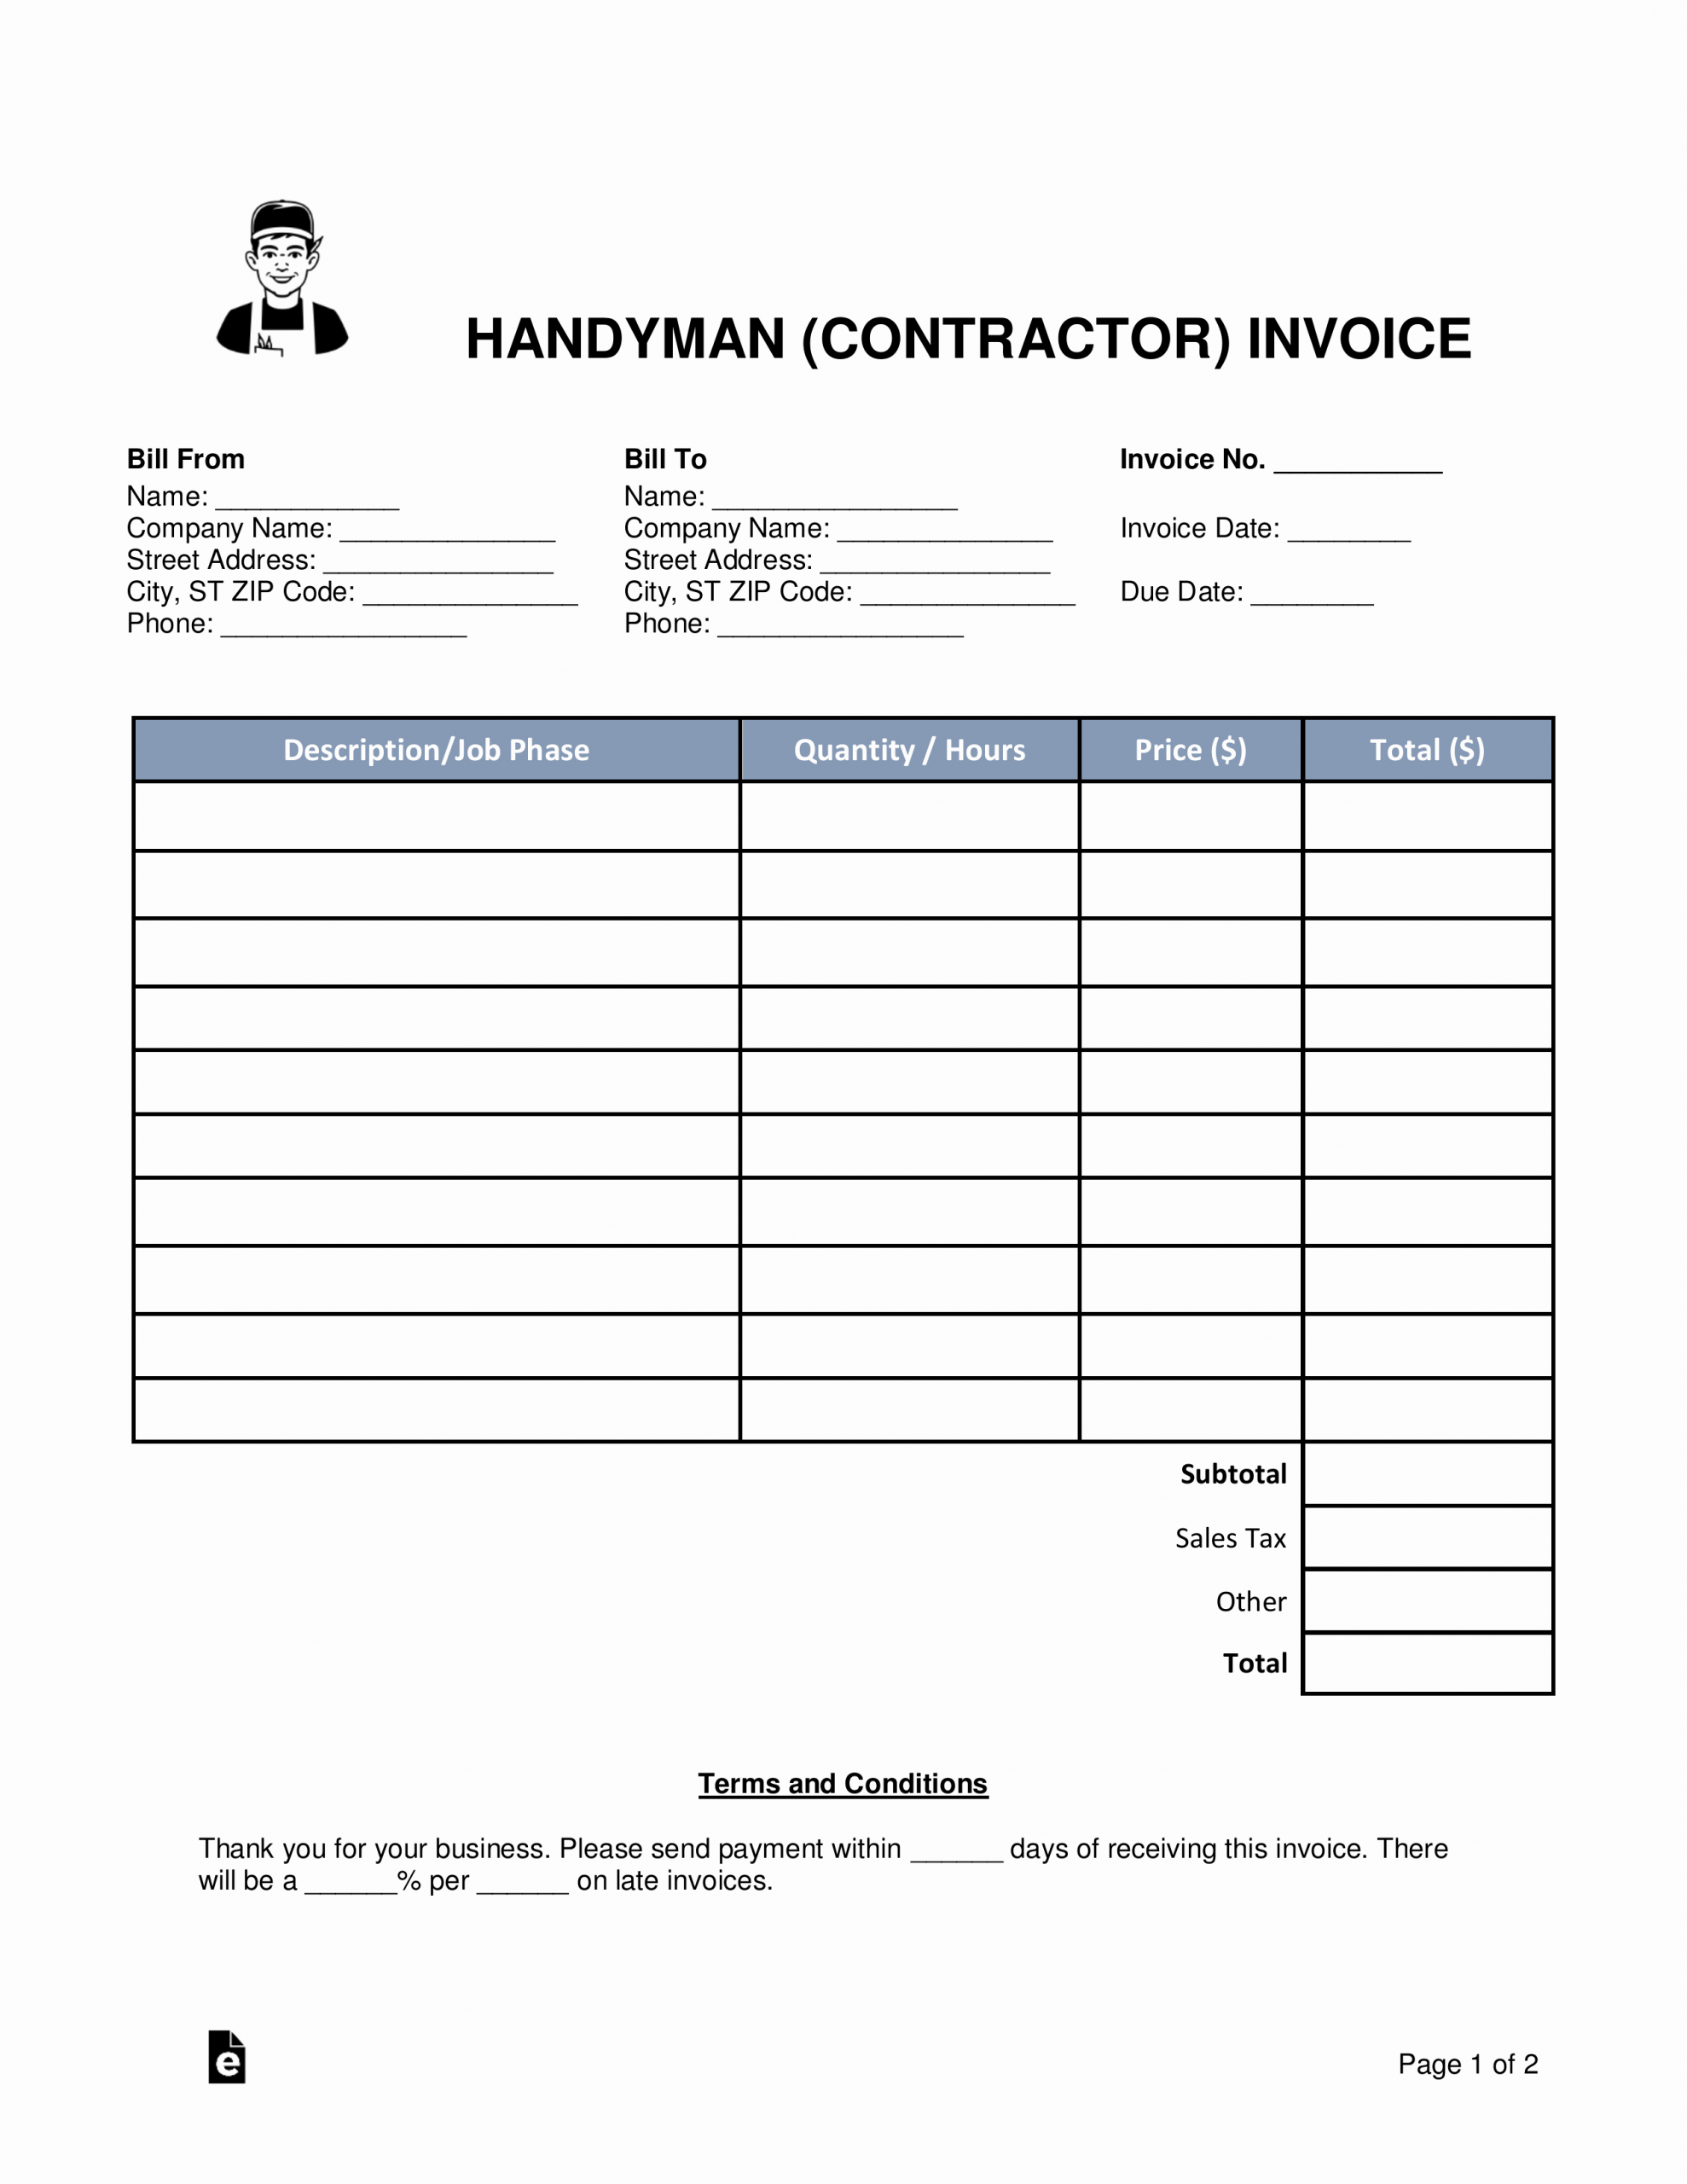 Free Handyman Invoice Template Awesome Free Handyman Contractor Invoice Template Word